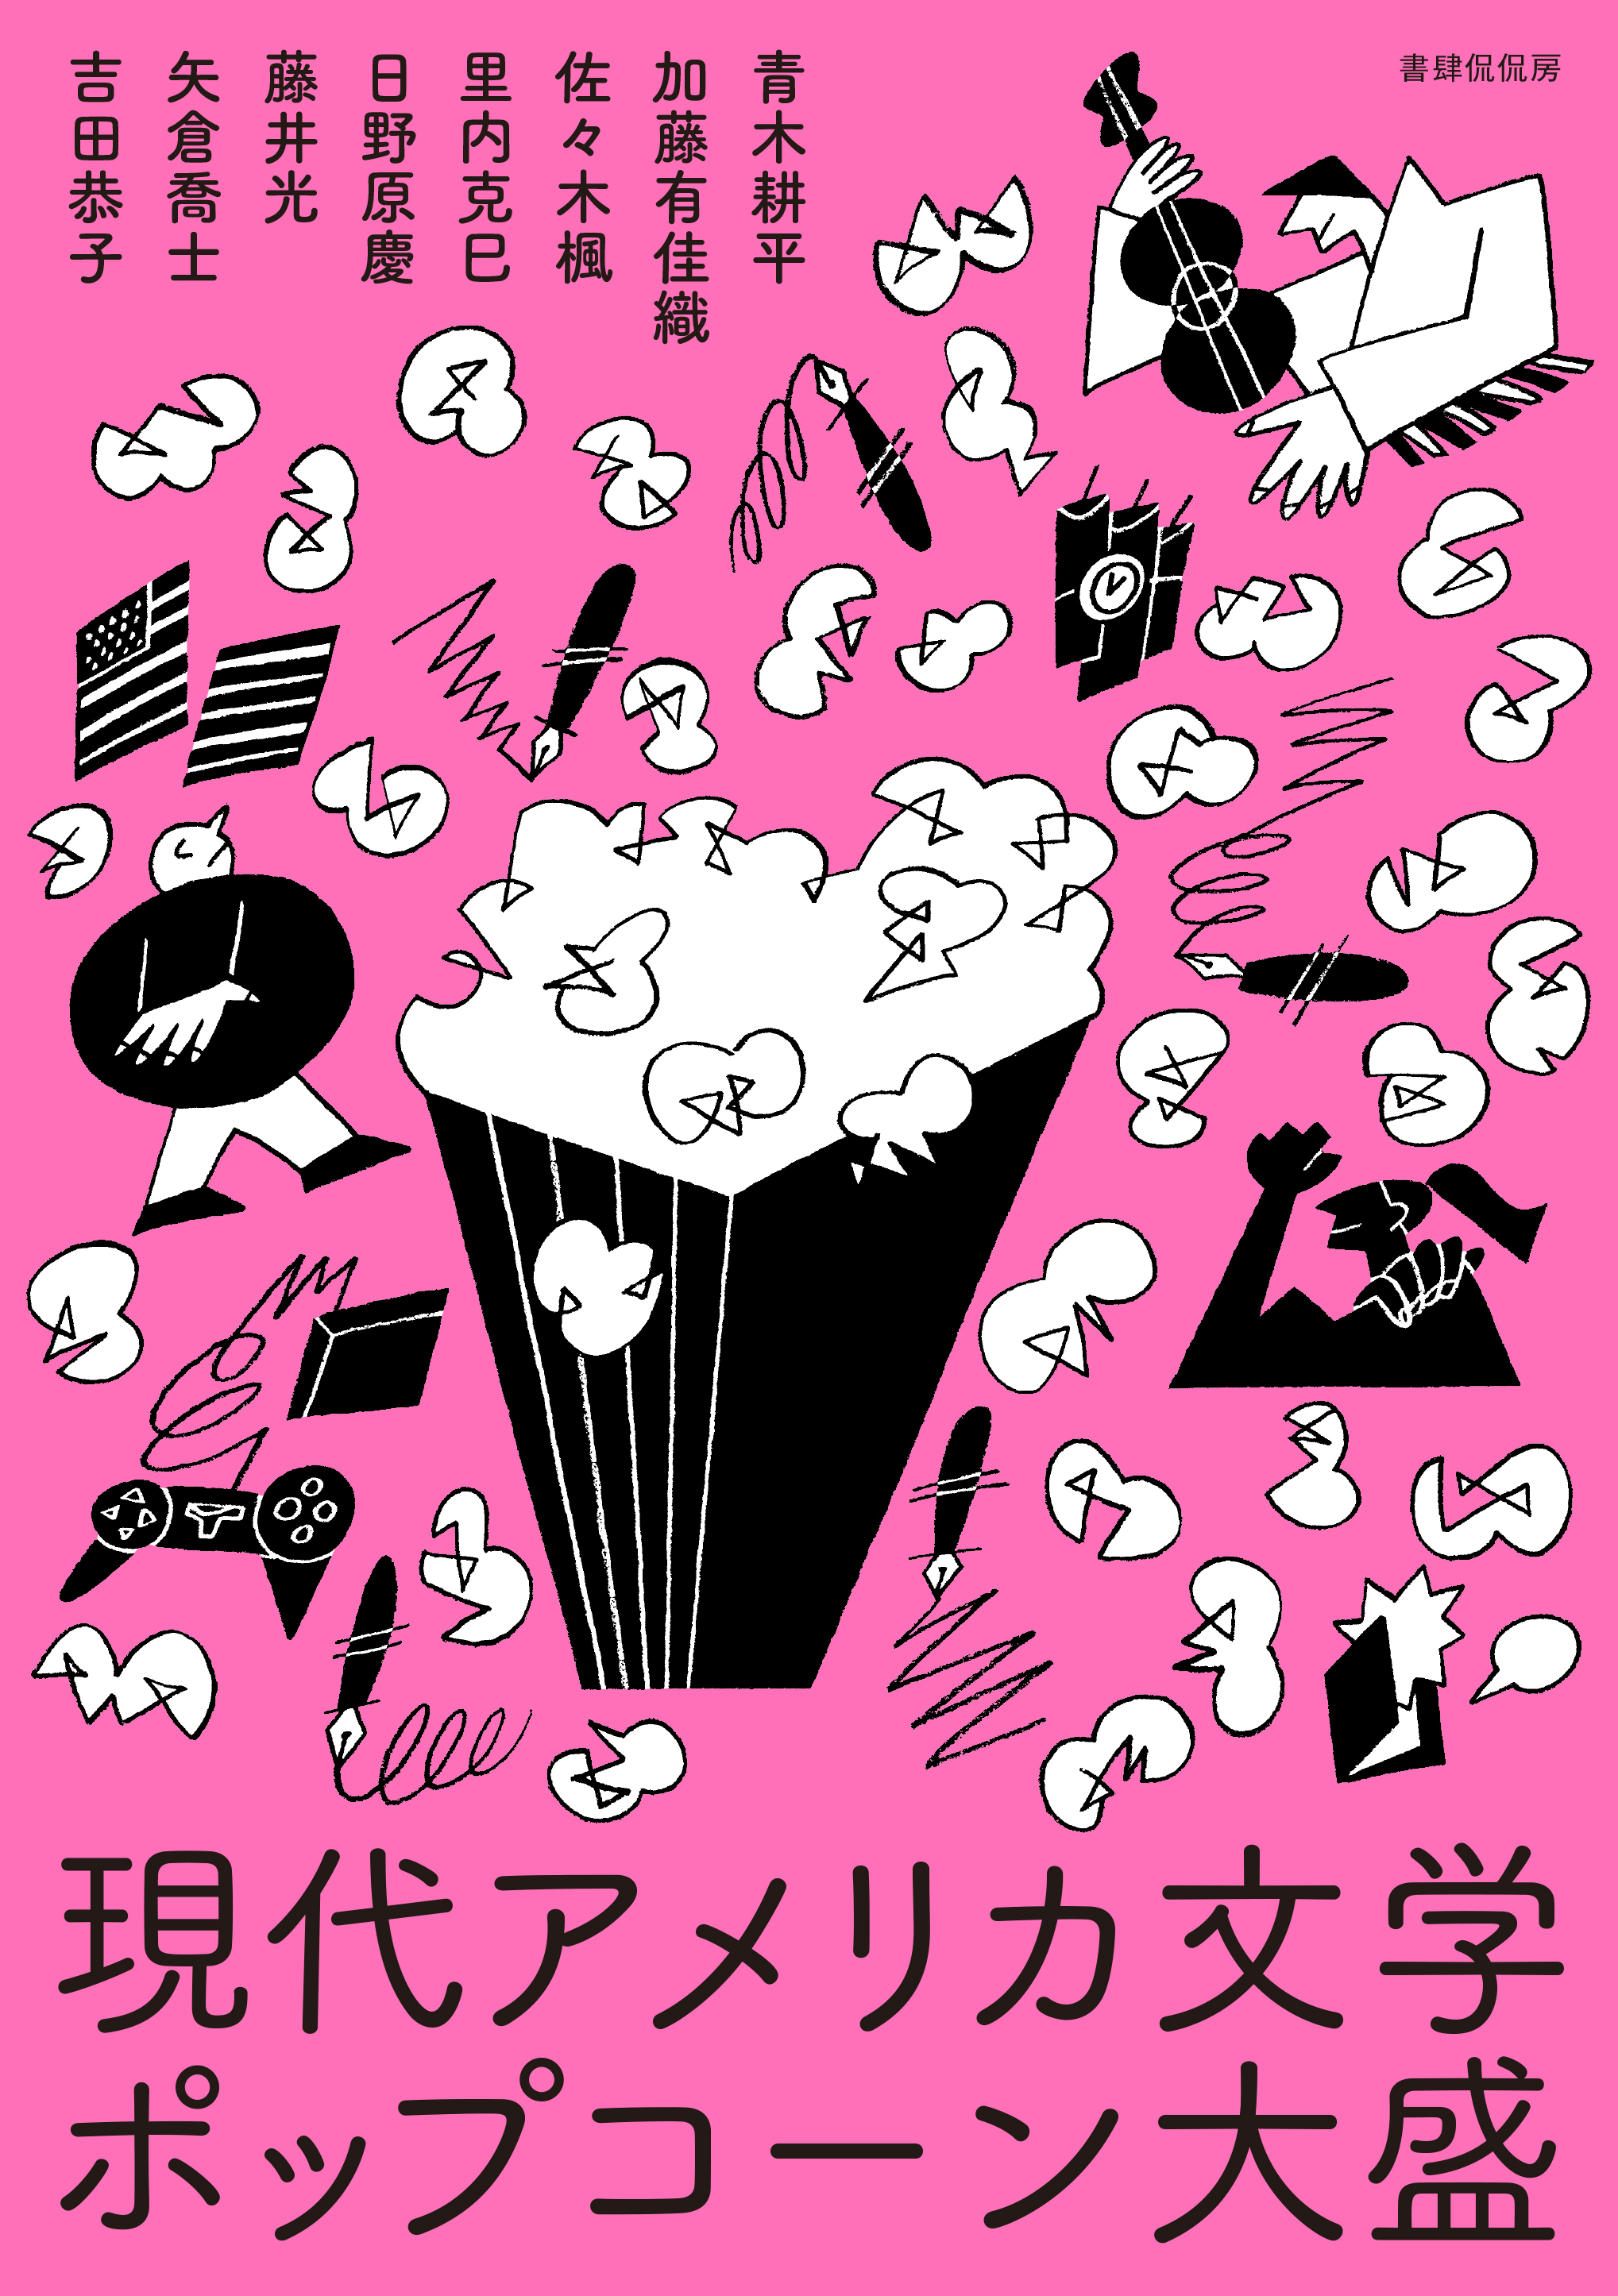 popcorn illustration on a pink cover